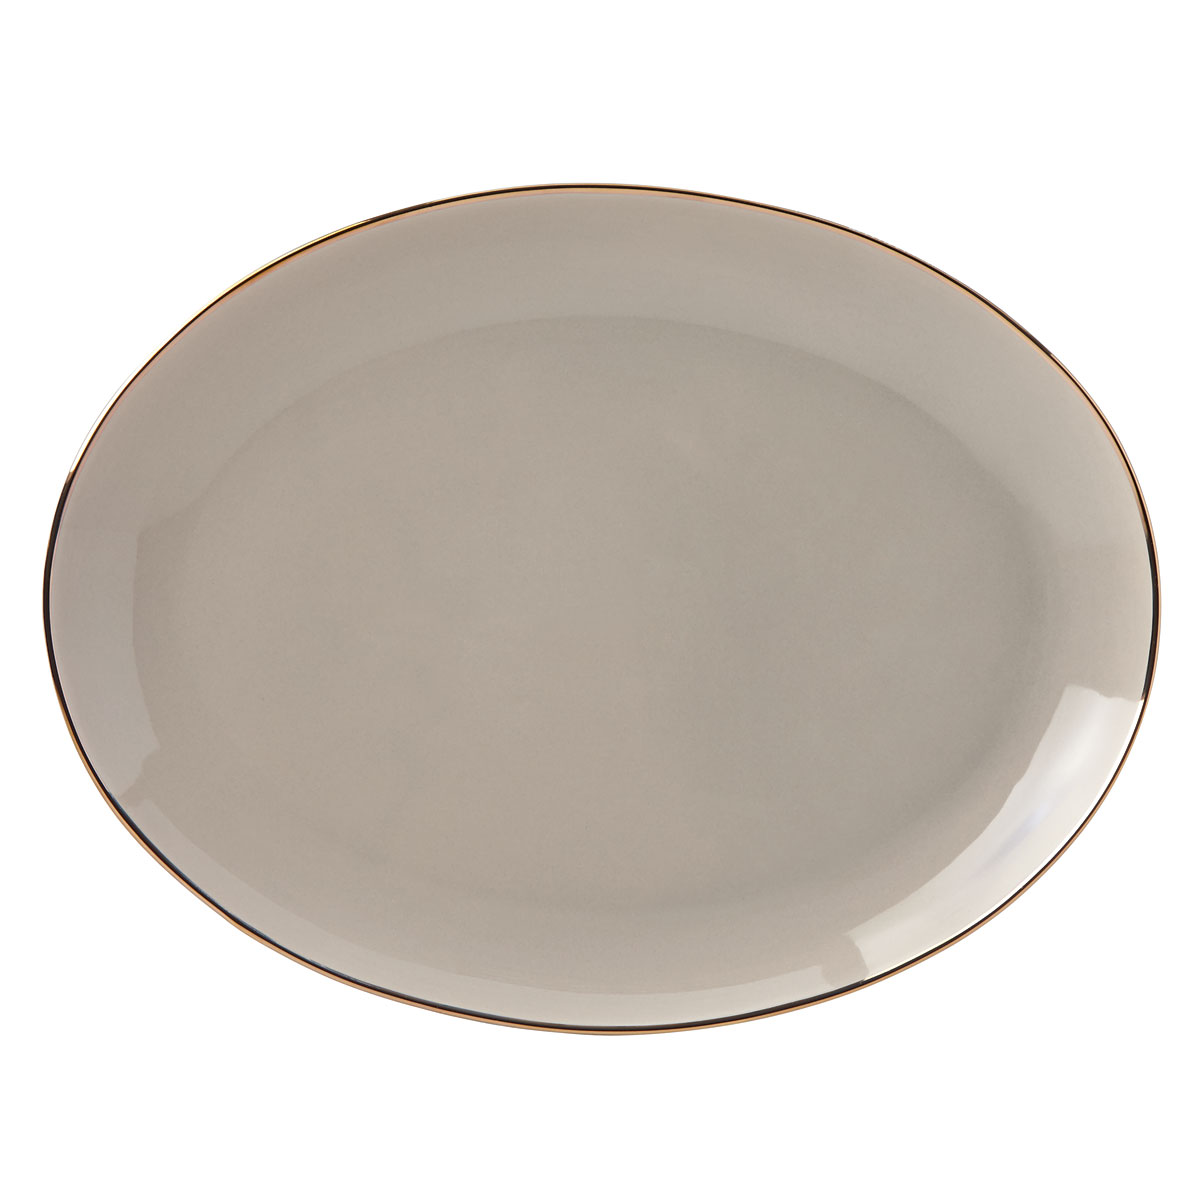 Lenox Trianna Taupe China Oval Platter